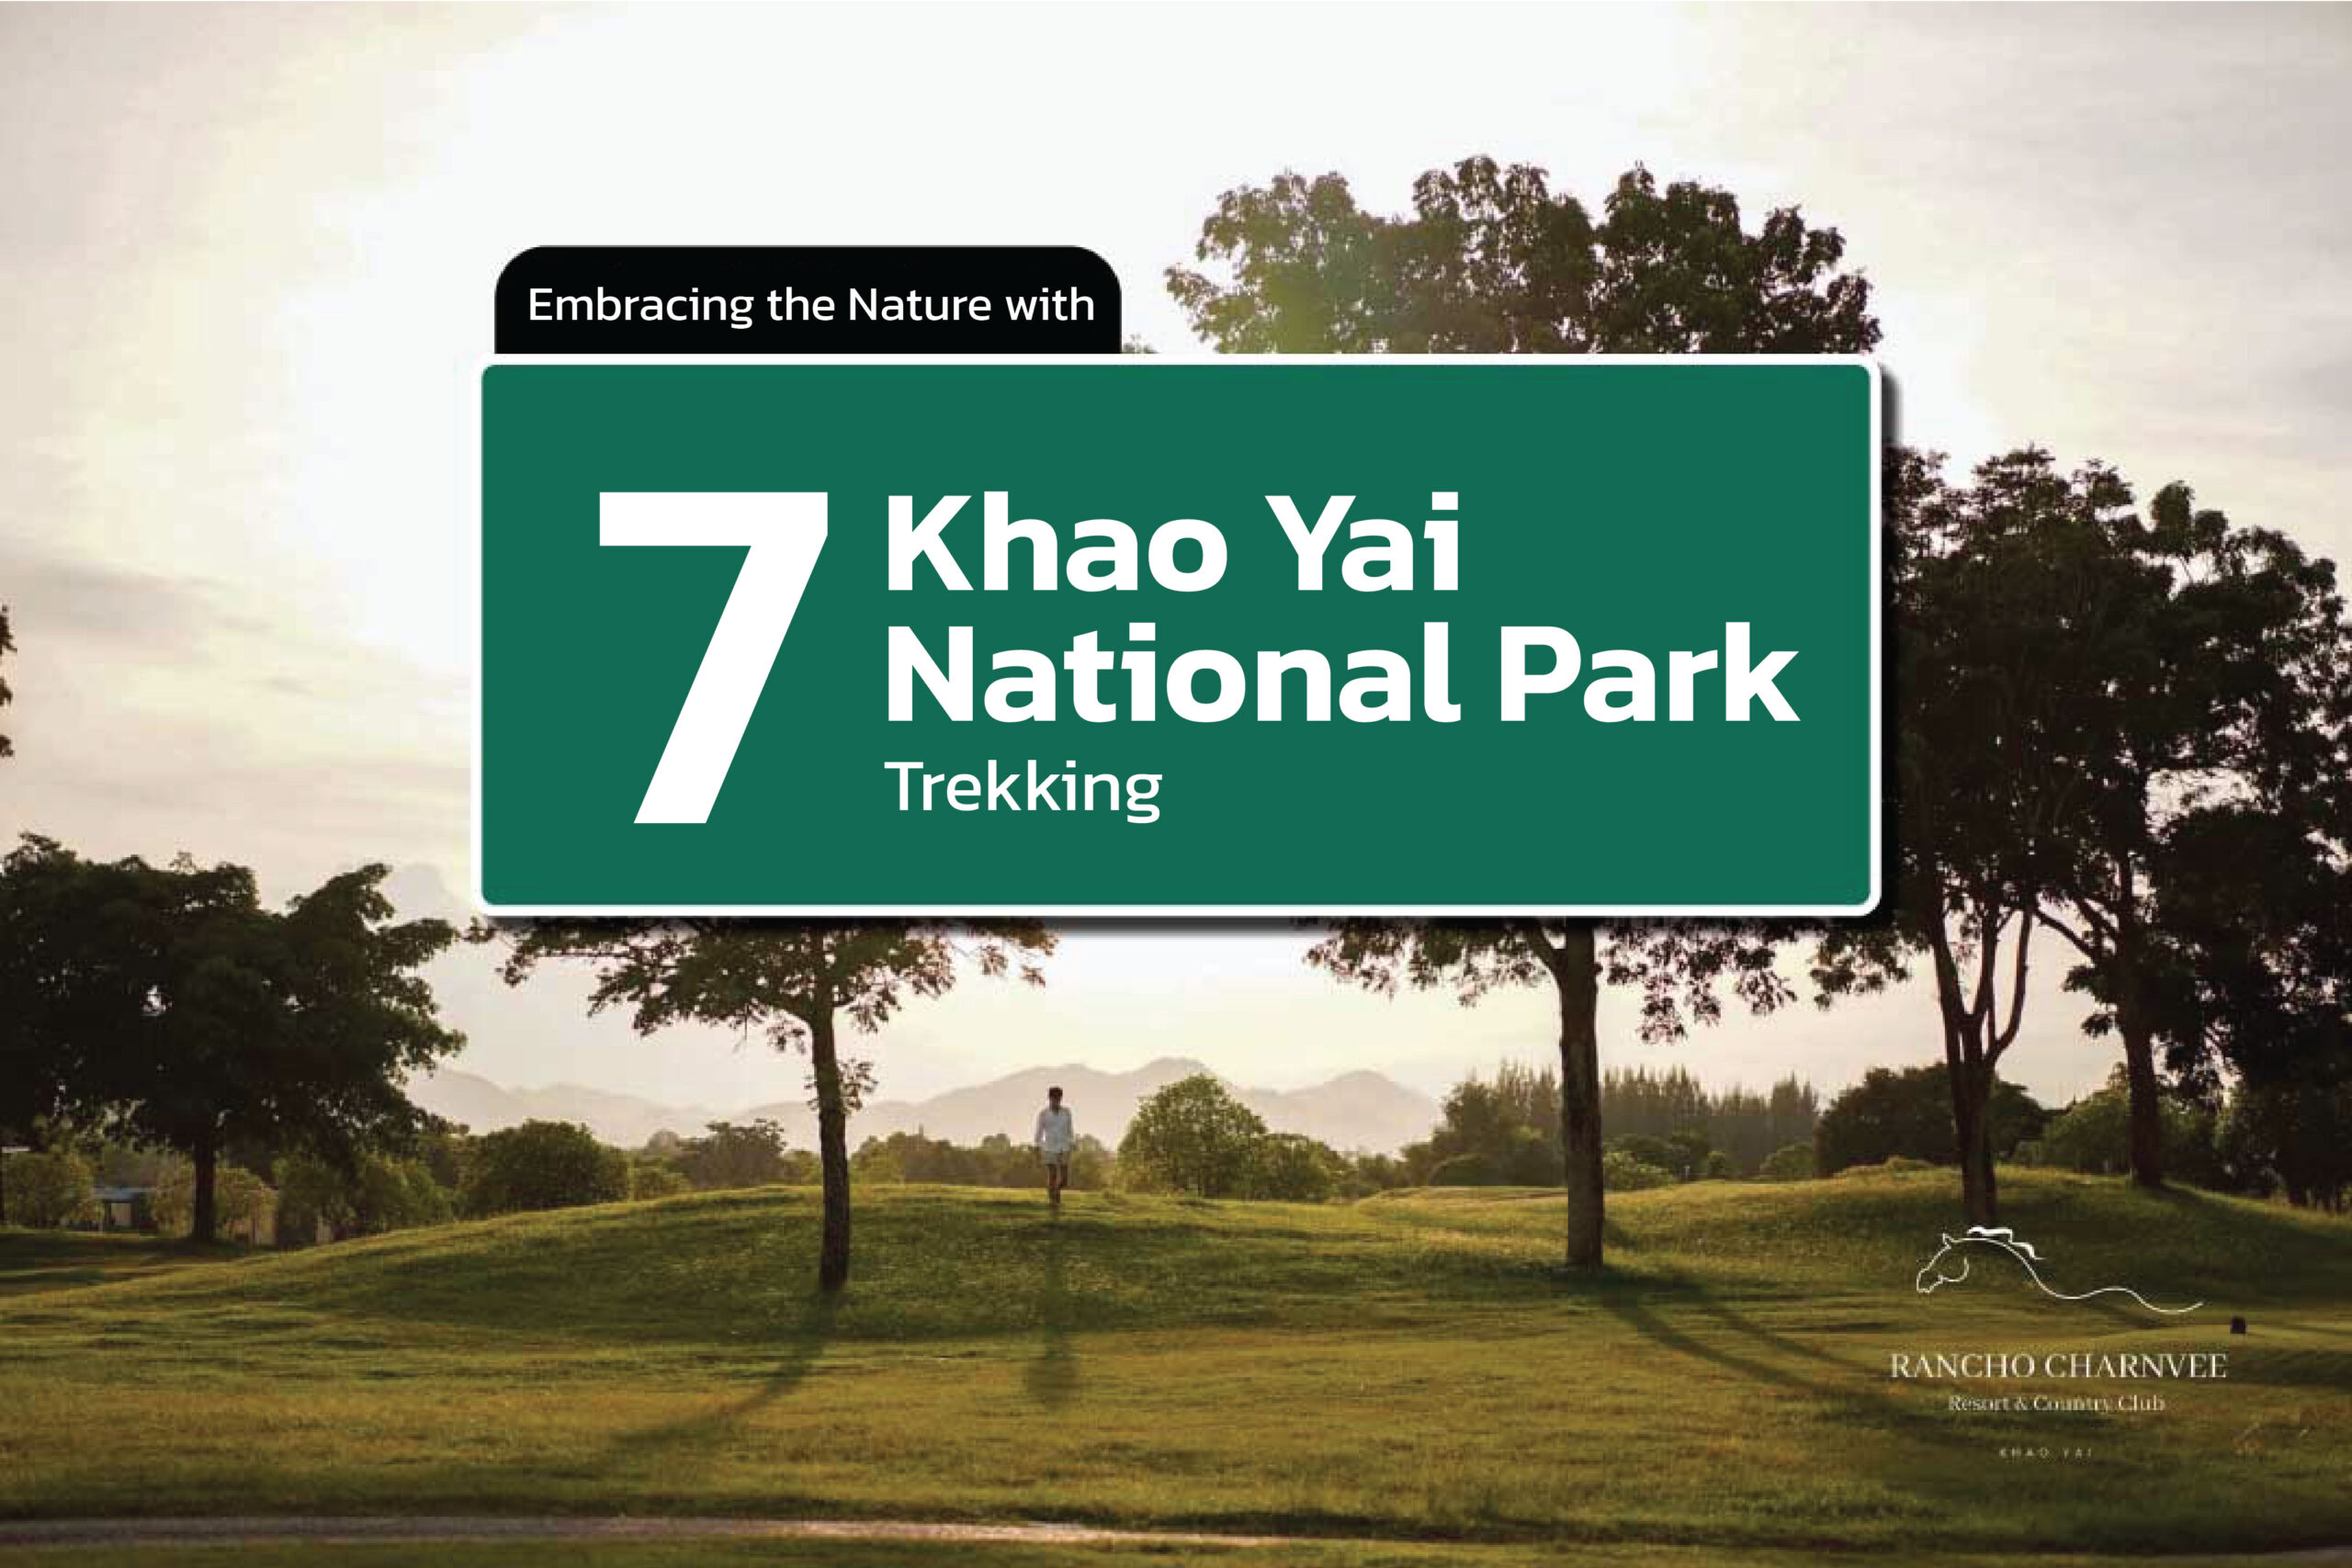 Embracing the Nature with 7 Khao Yai National Park Trekking